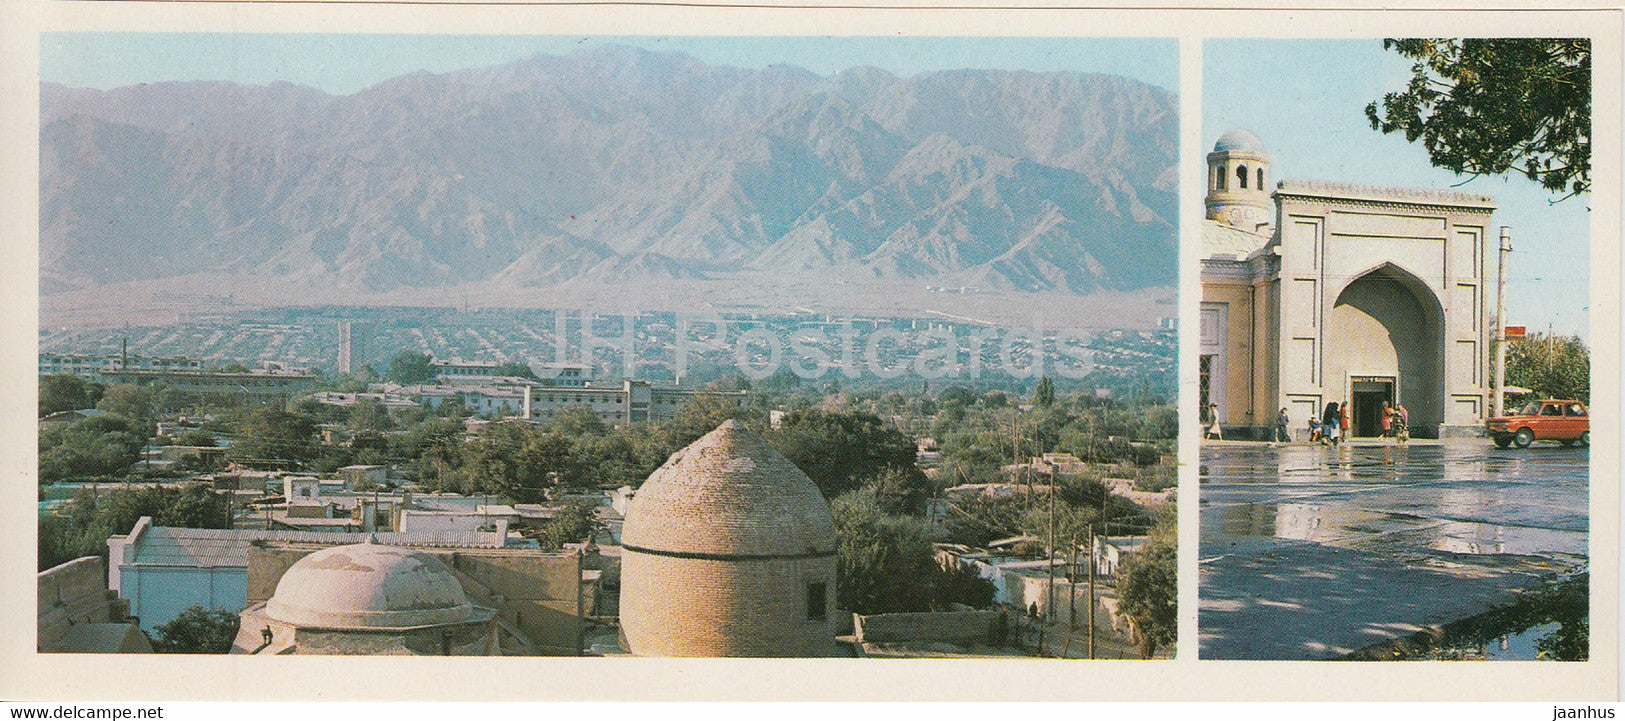 Leninabad - Khujand - Sheikh Maslihaddin complex - regional historical museum - 1979 - Tajikistan USSR - unused - JH Postcards